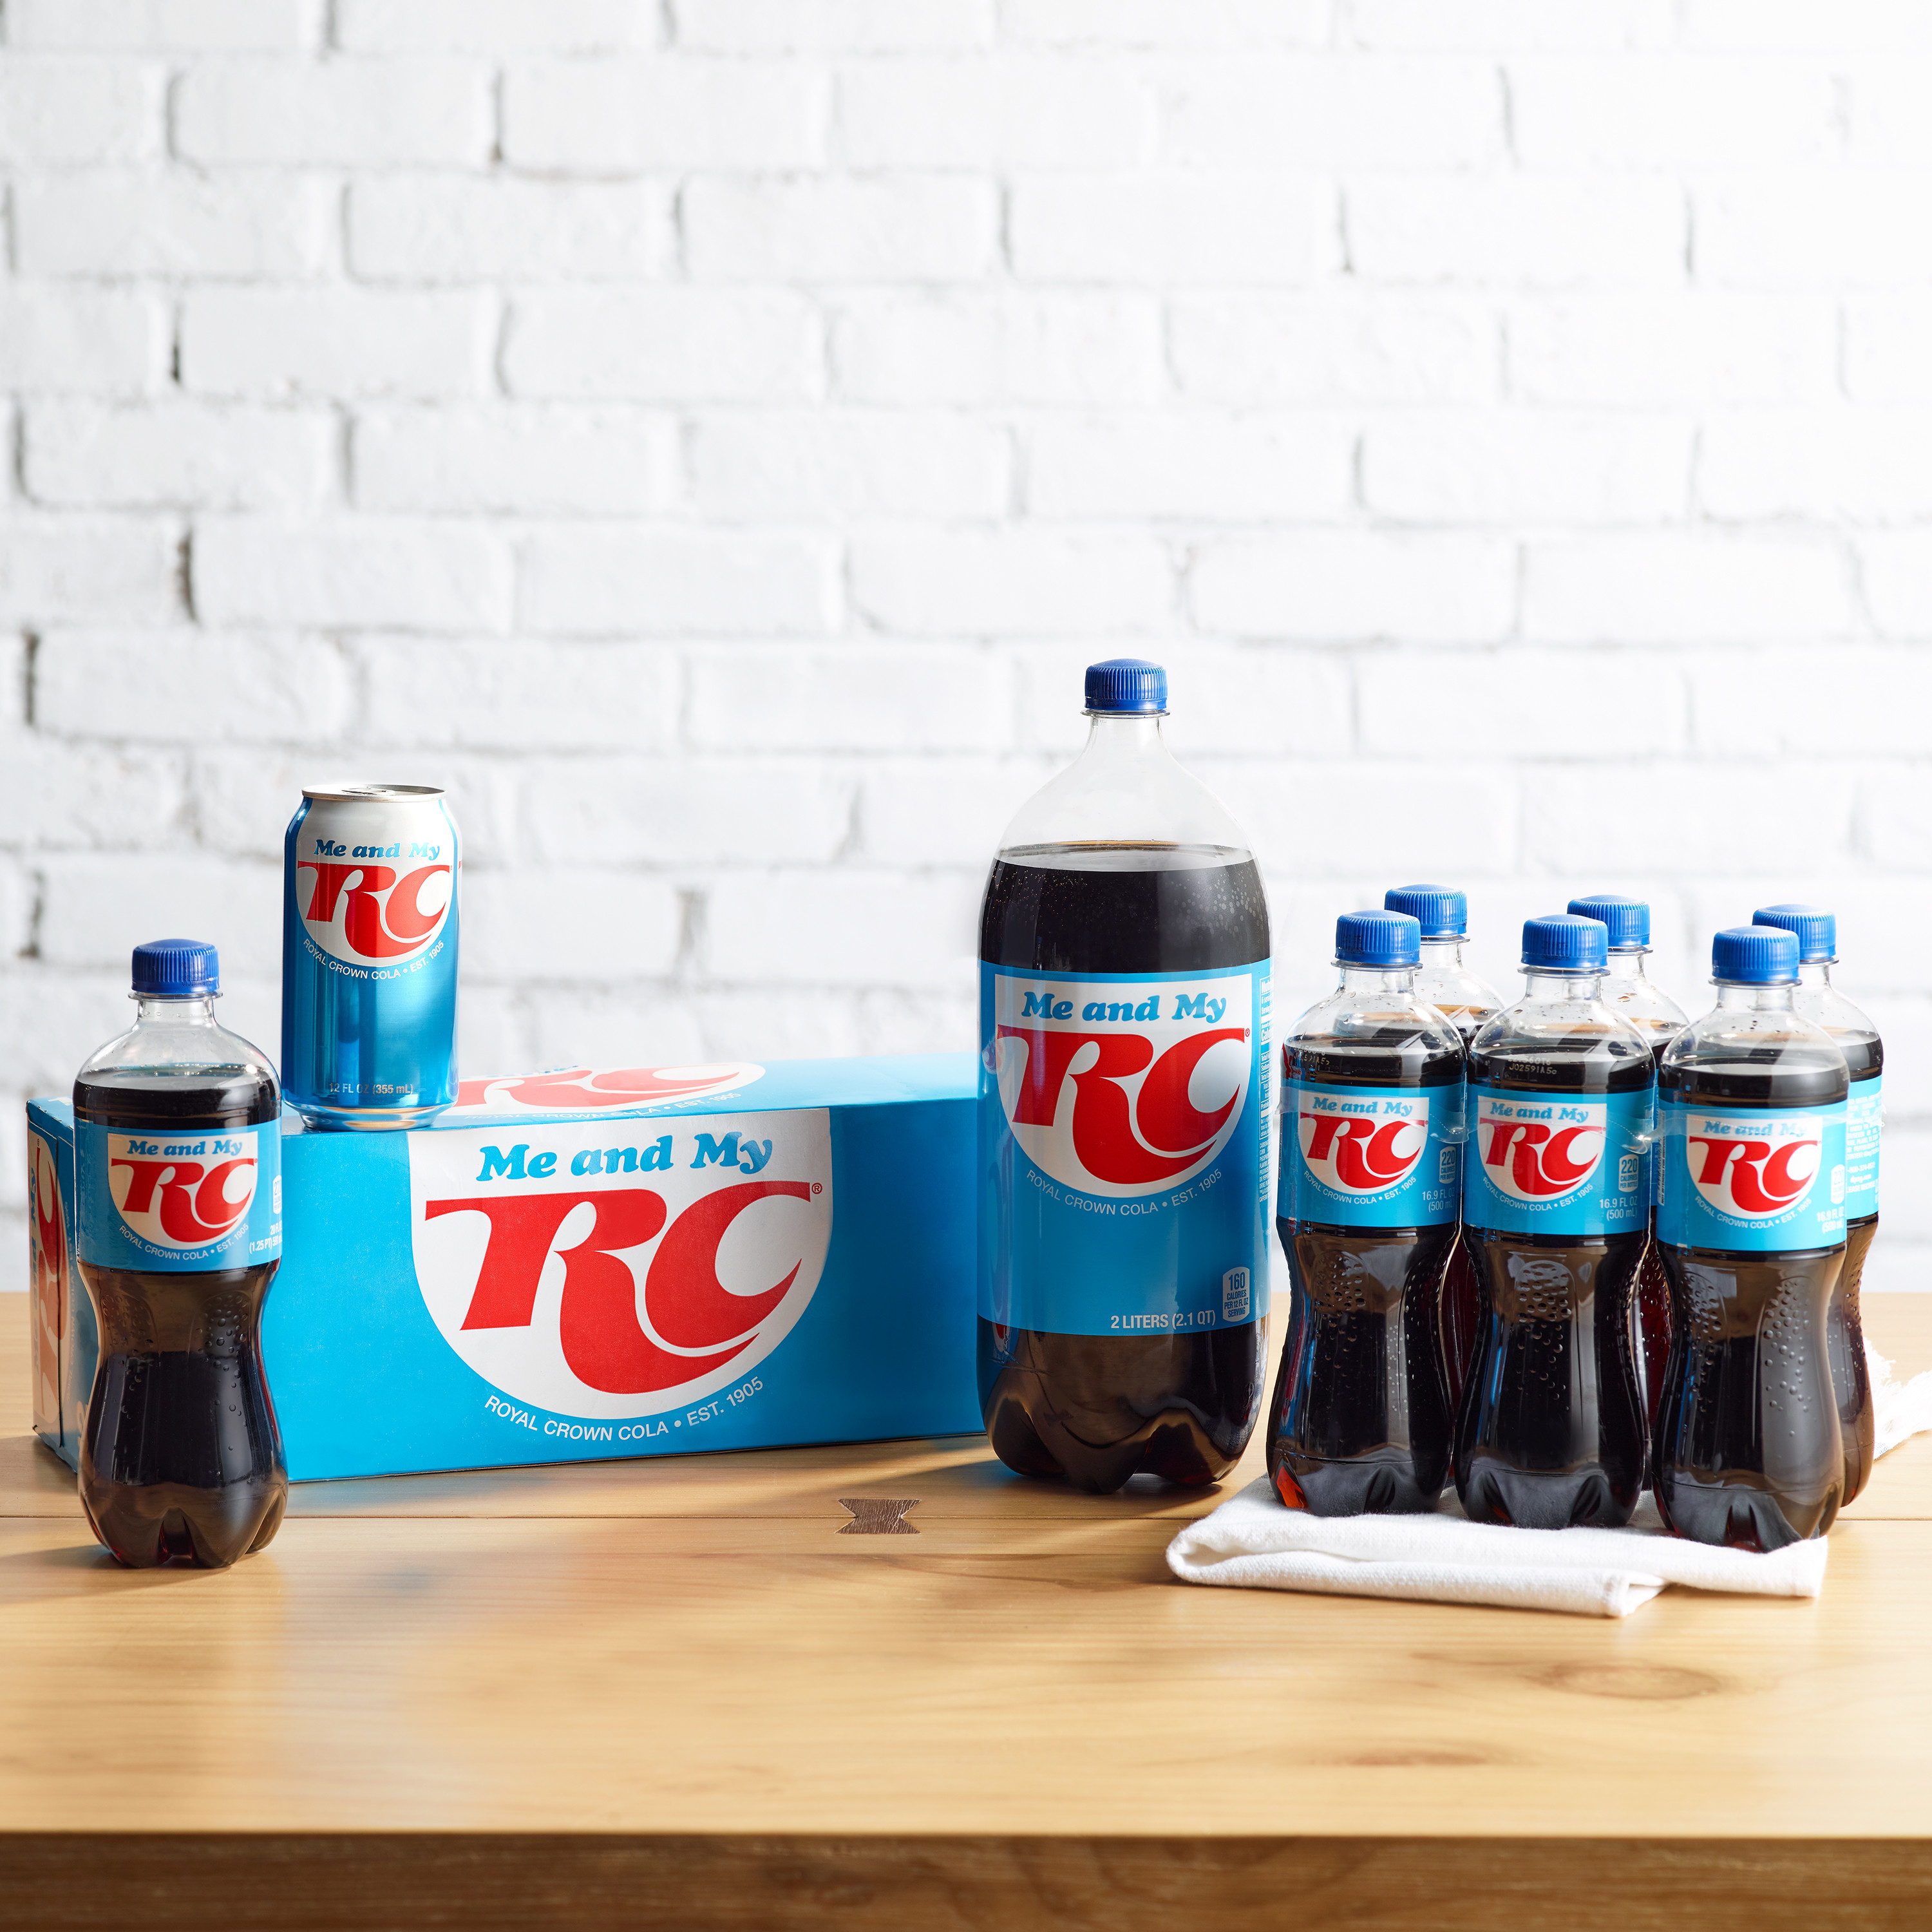 Diet RC Cola Soda Pop, 12 fl oz, 12 Pack Cans - image 3 of 10